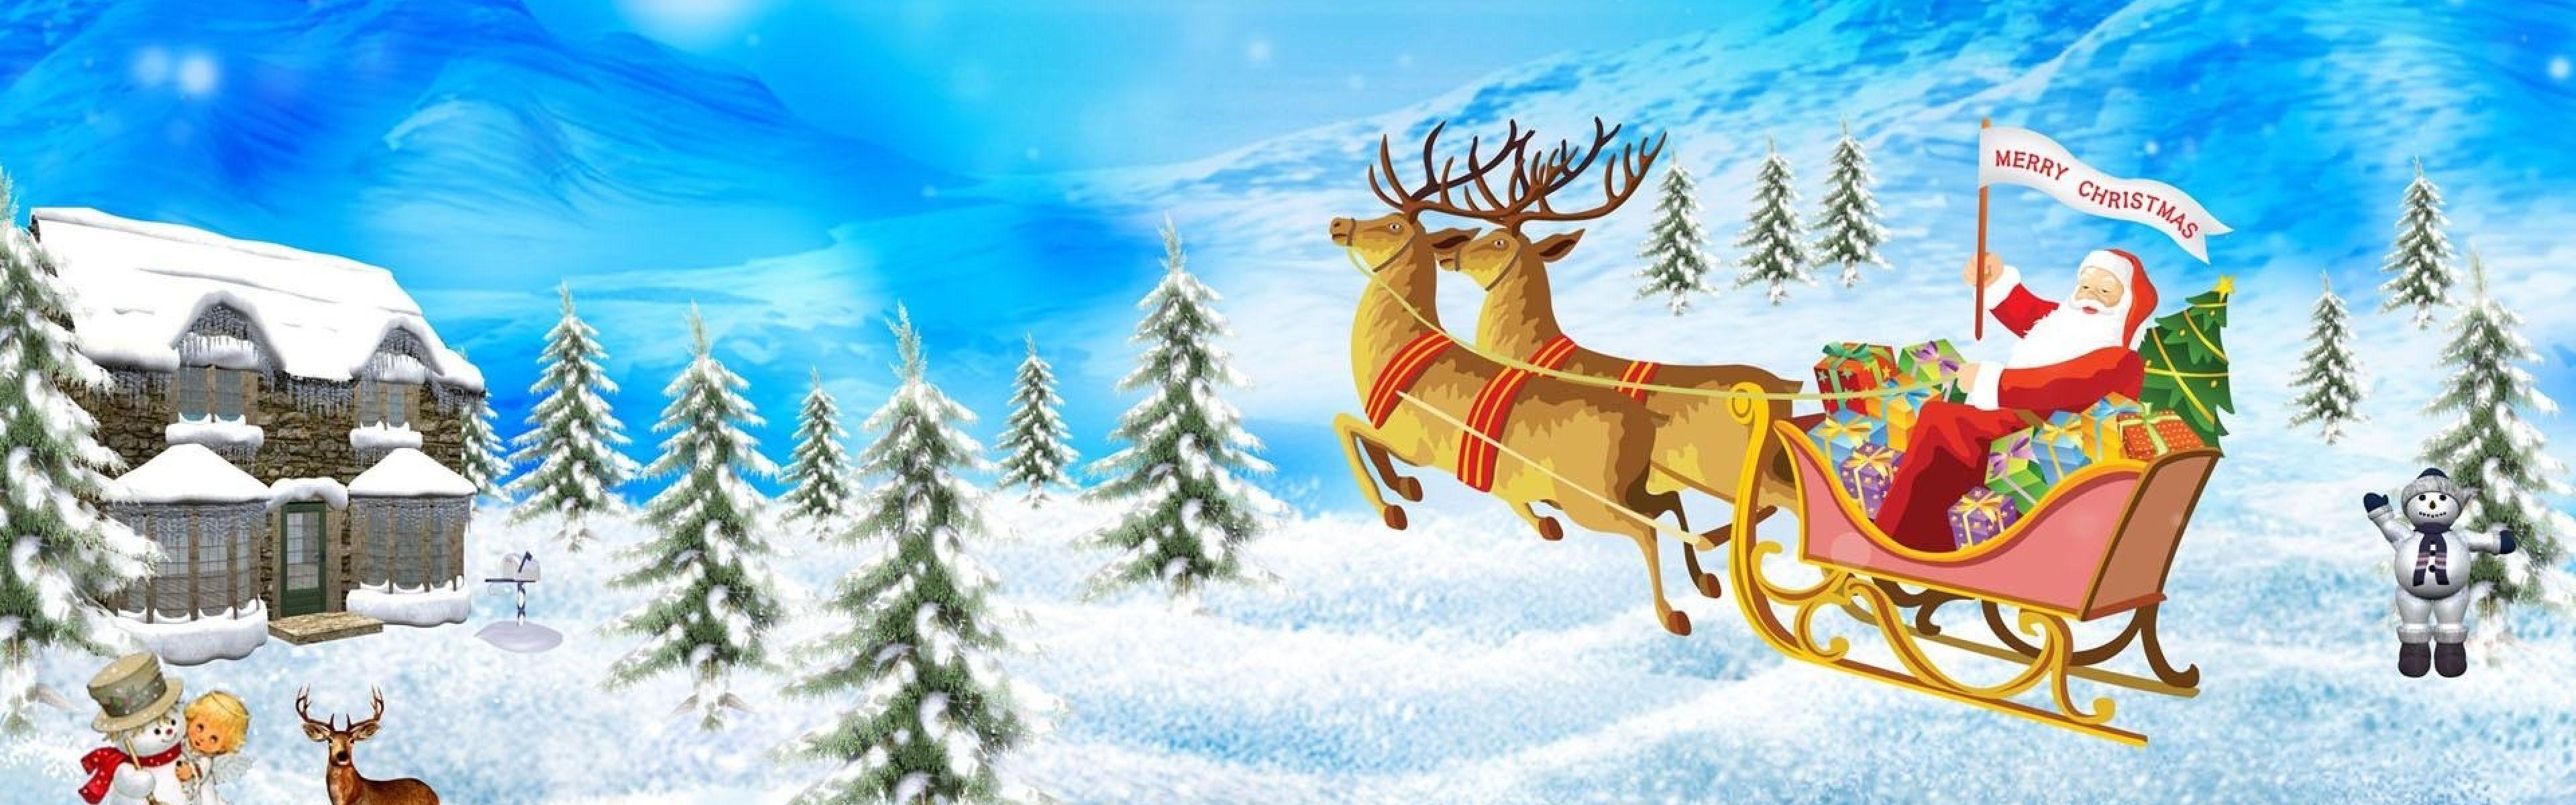 Download Wallpaper 3840x1200 Santa claus, Reindeer, Sleigh